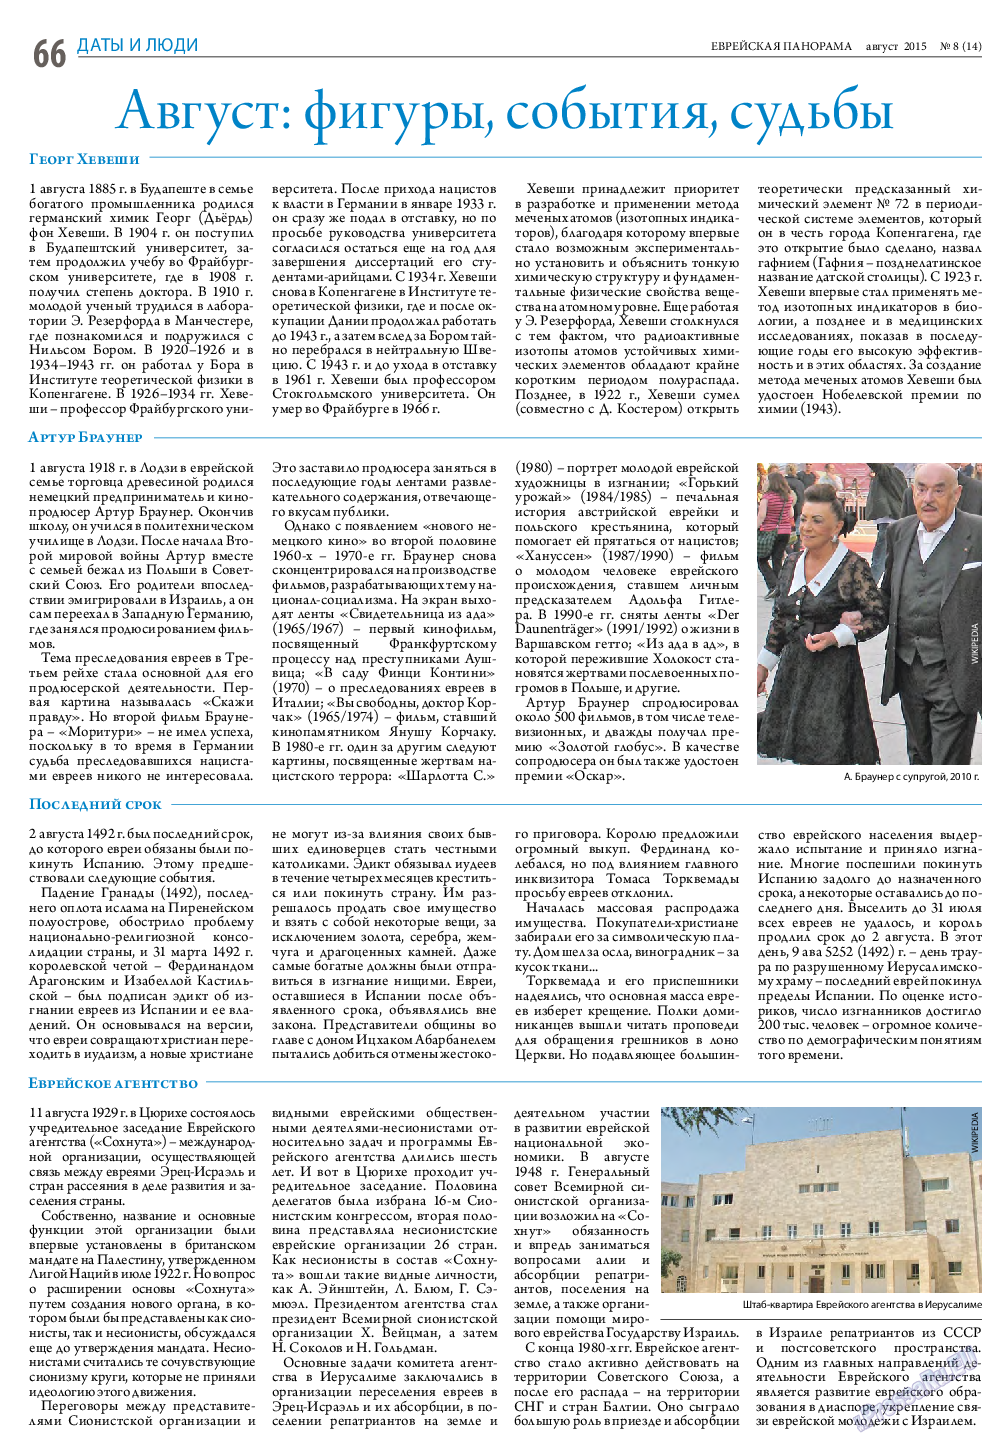 Еврейская панорама, газета. 2015 №8 стр.66